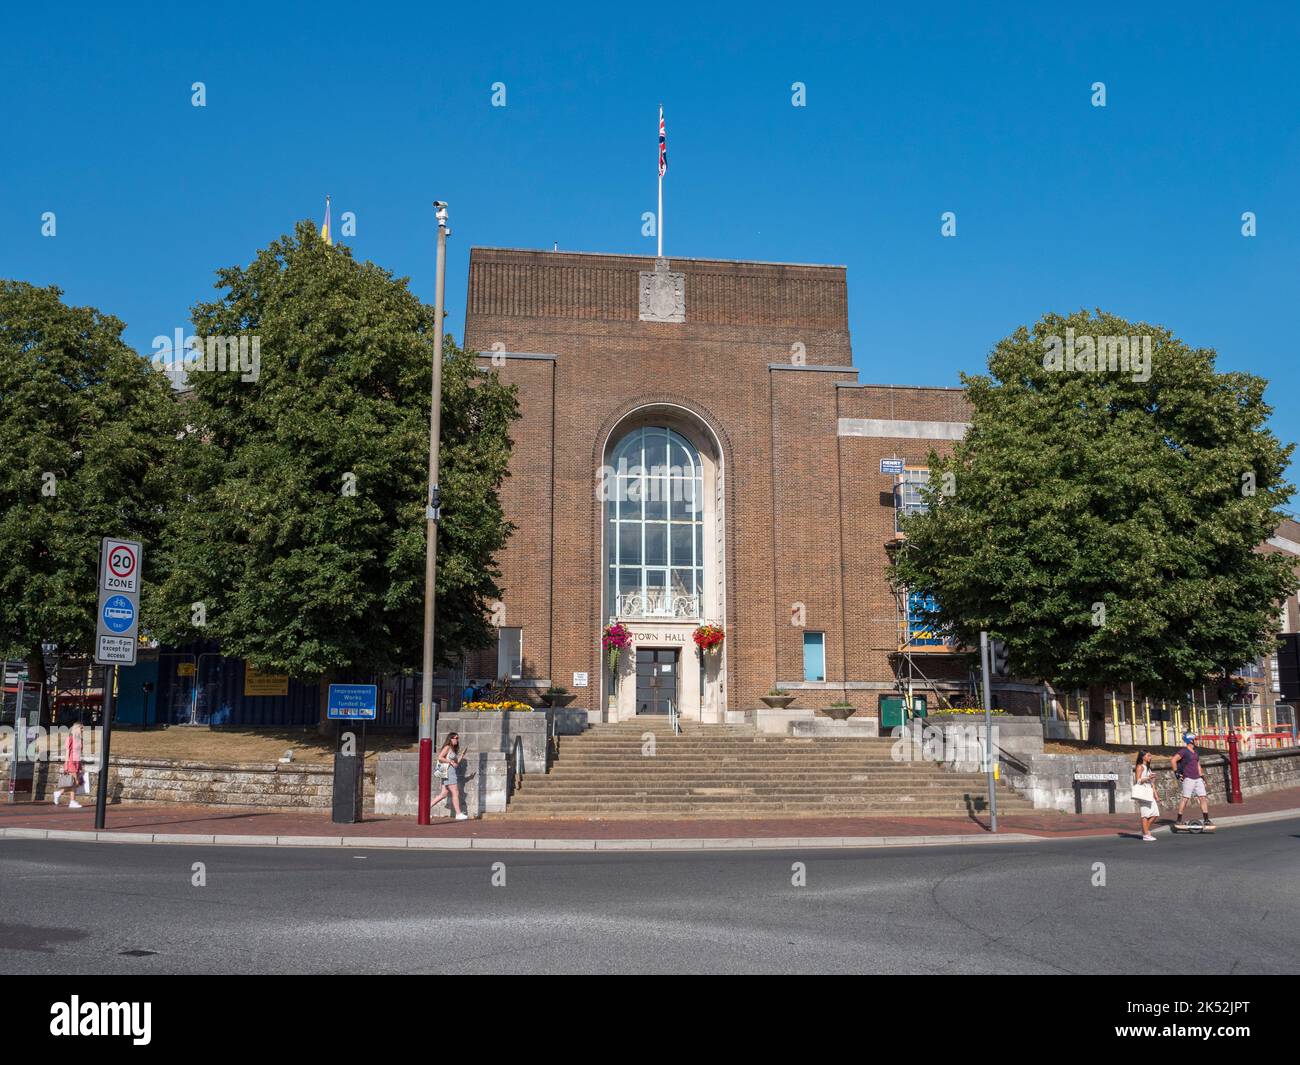 The Town Hall in Royal Tunbridge Wells, Kent, UK. Stock Photo